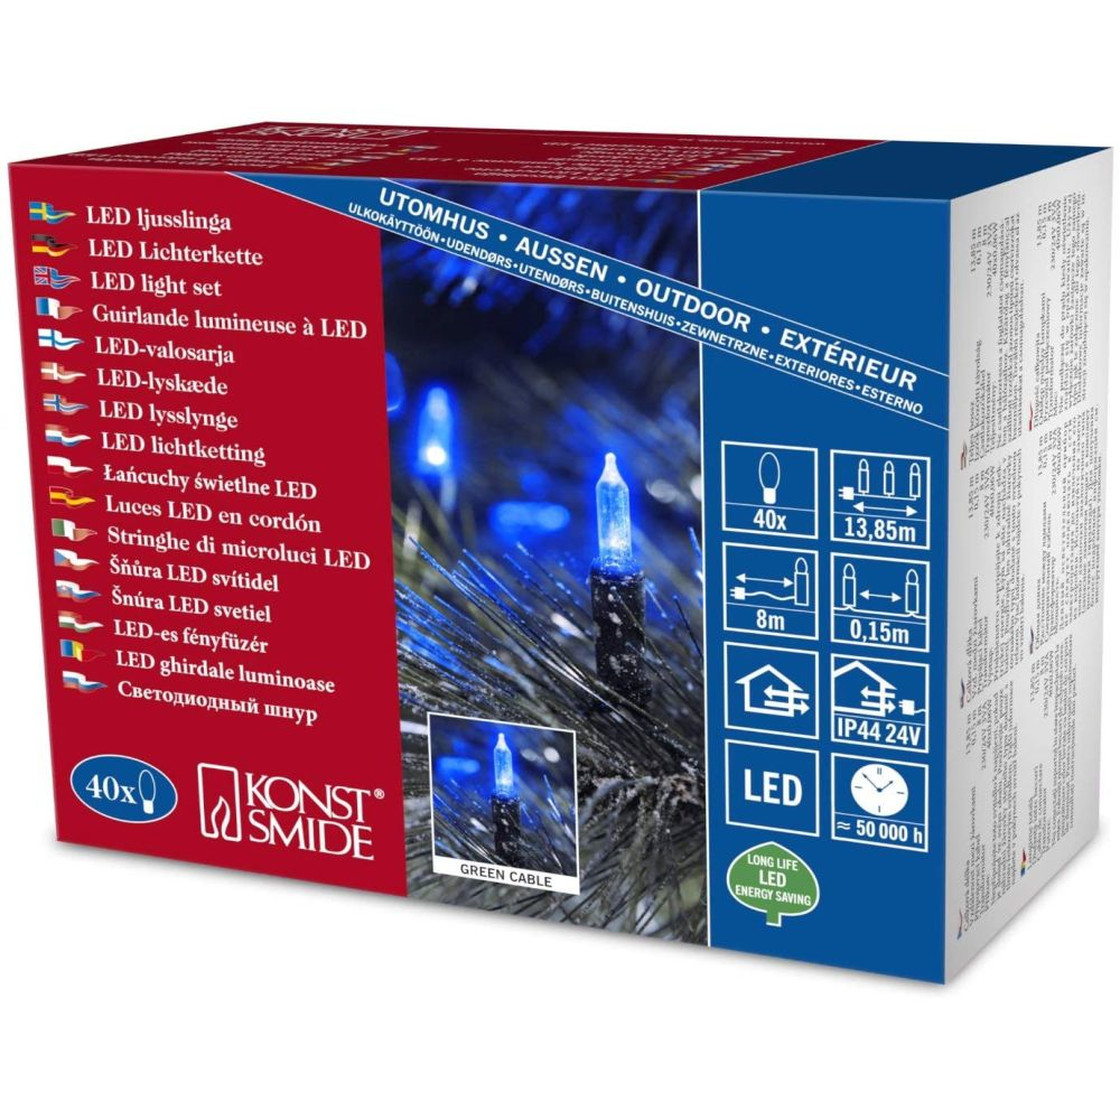 Konstsmide 6004-400 LED Minilichterkette mit Blau Ausse 40 Dioden 24V